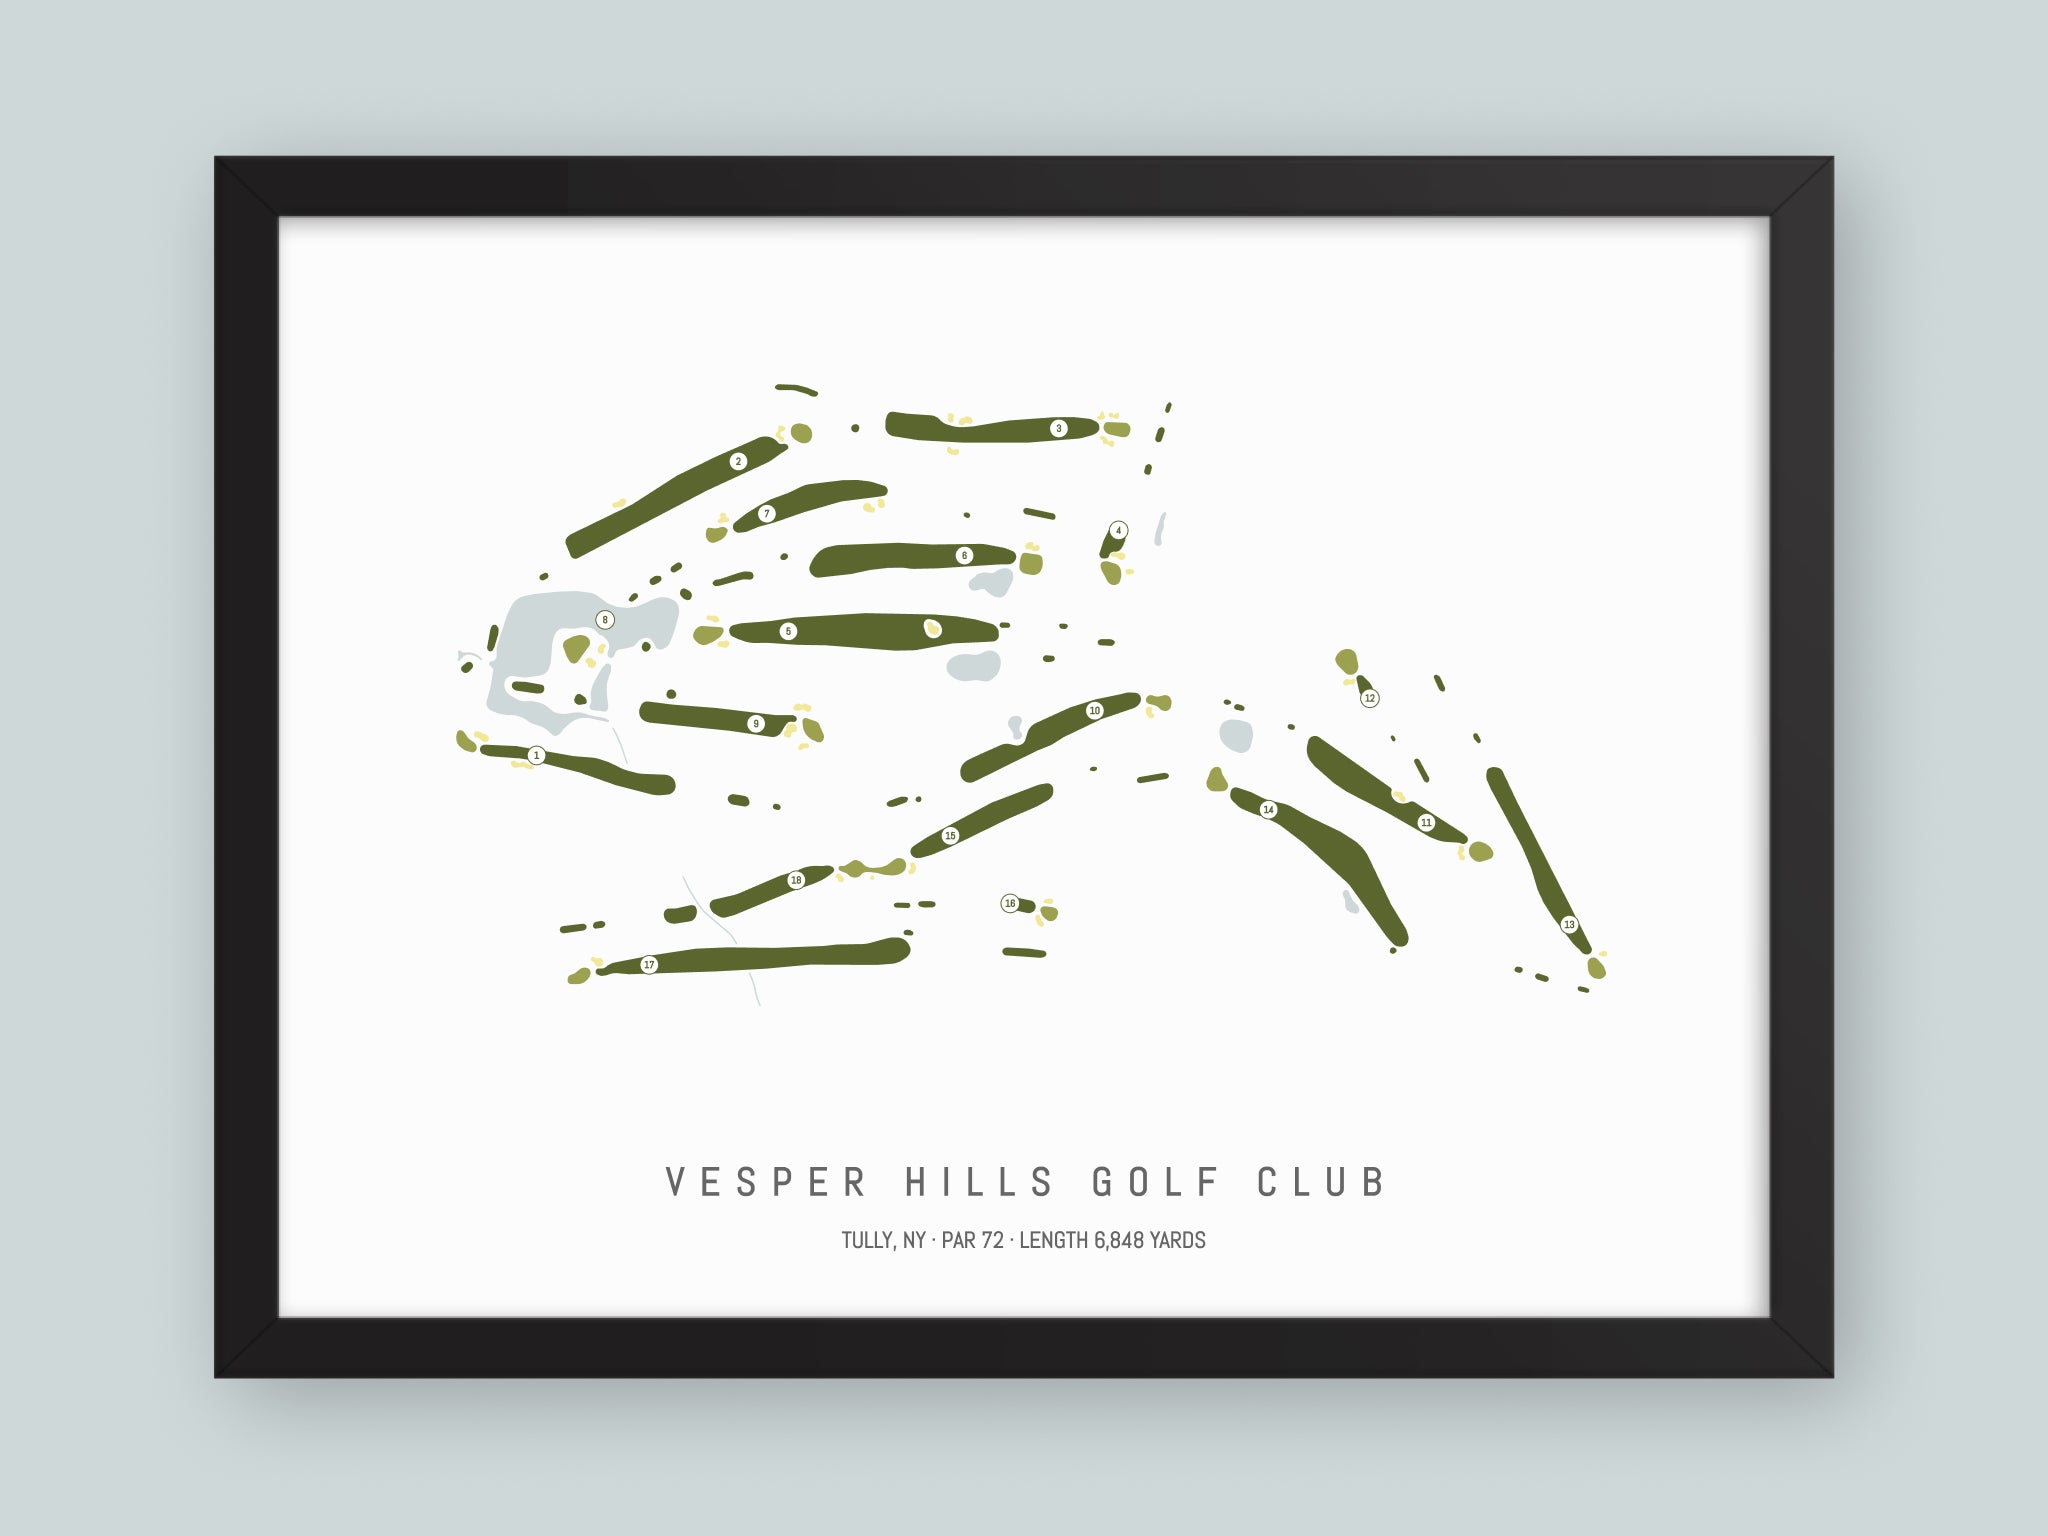 Vesper Hills Golf Club